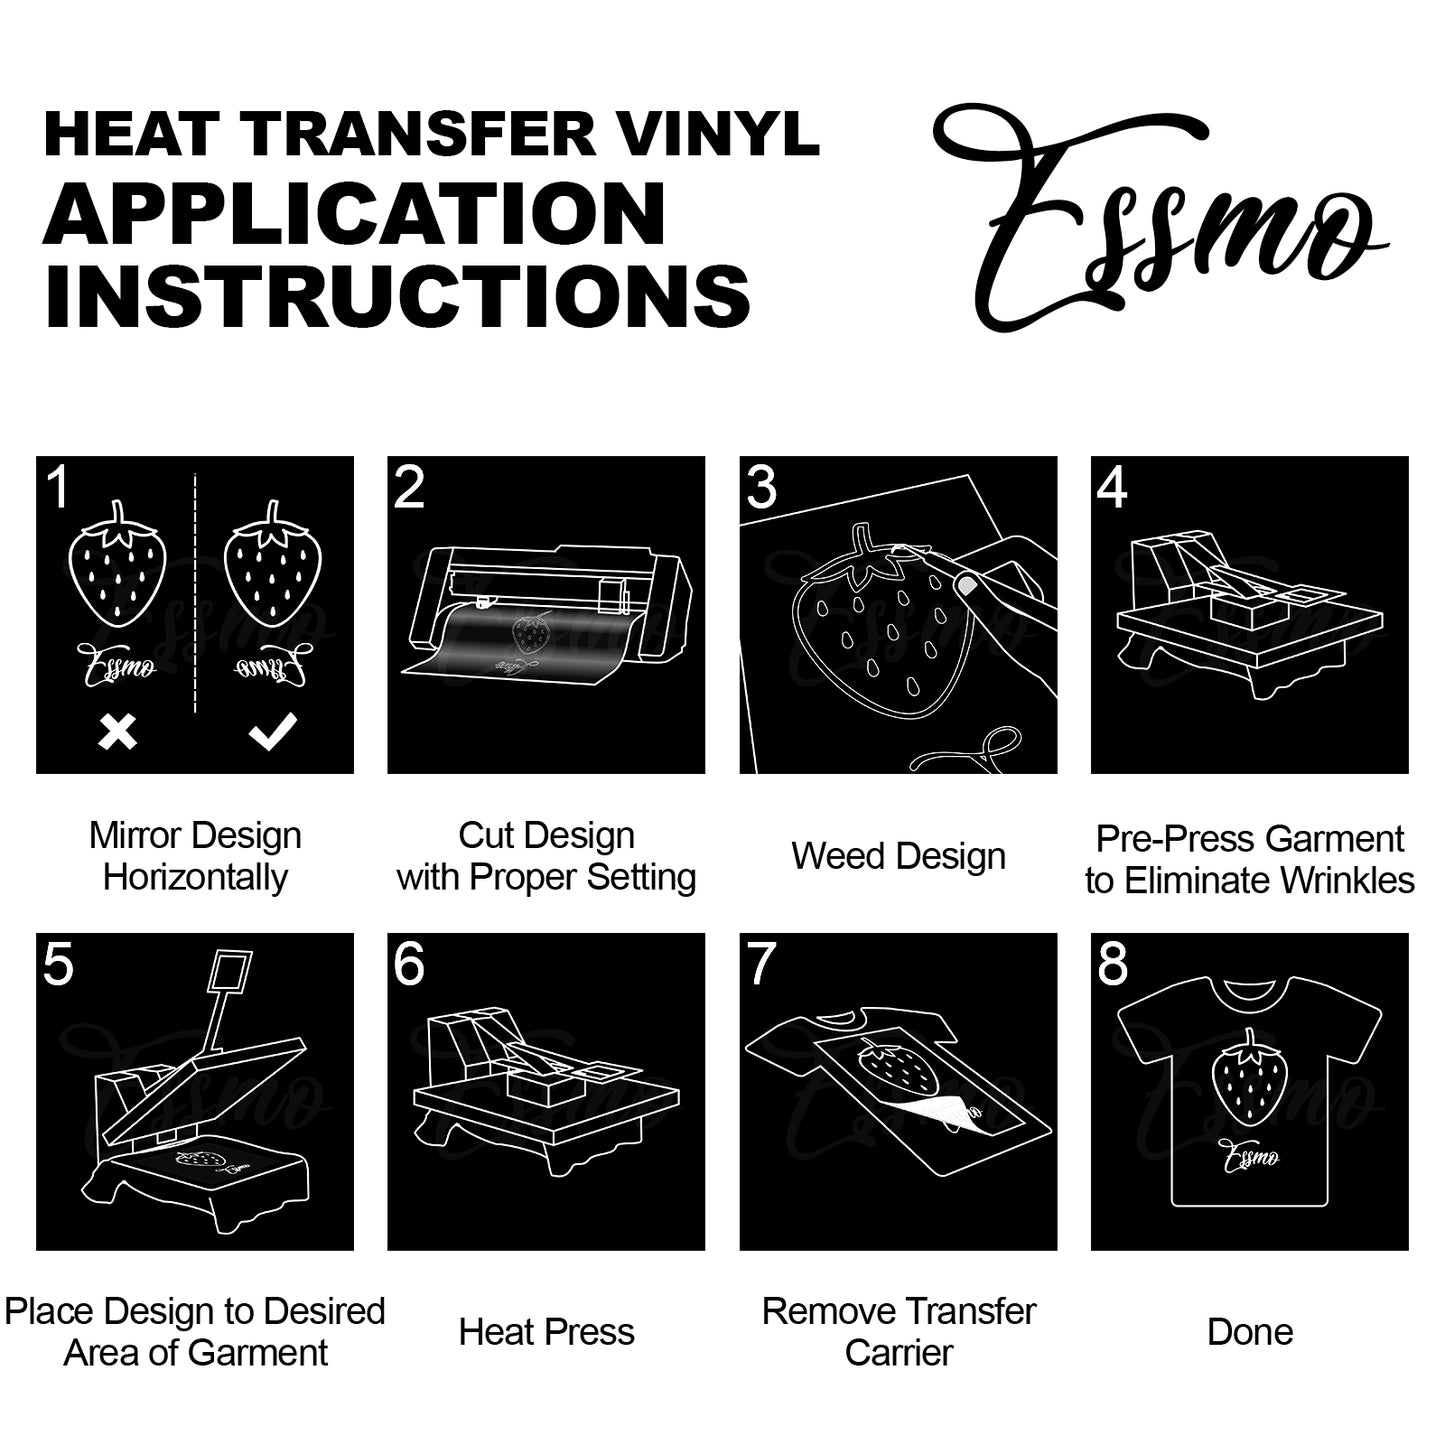 ESSMO™ Striped Black White Pattern Heat Transfer Vinyl HTV SP26